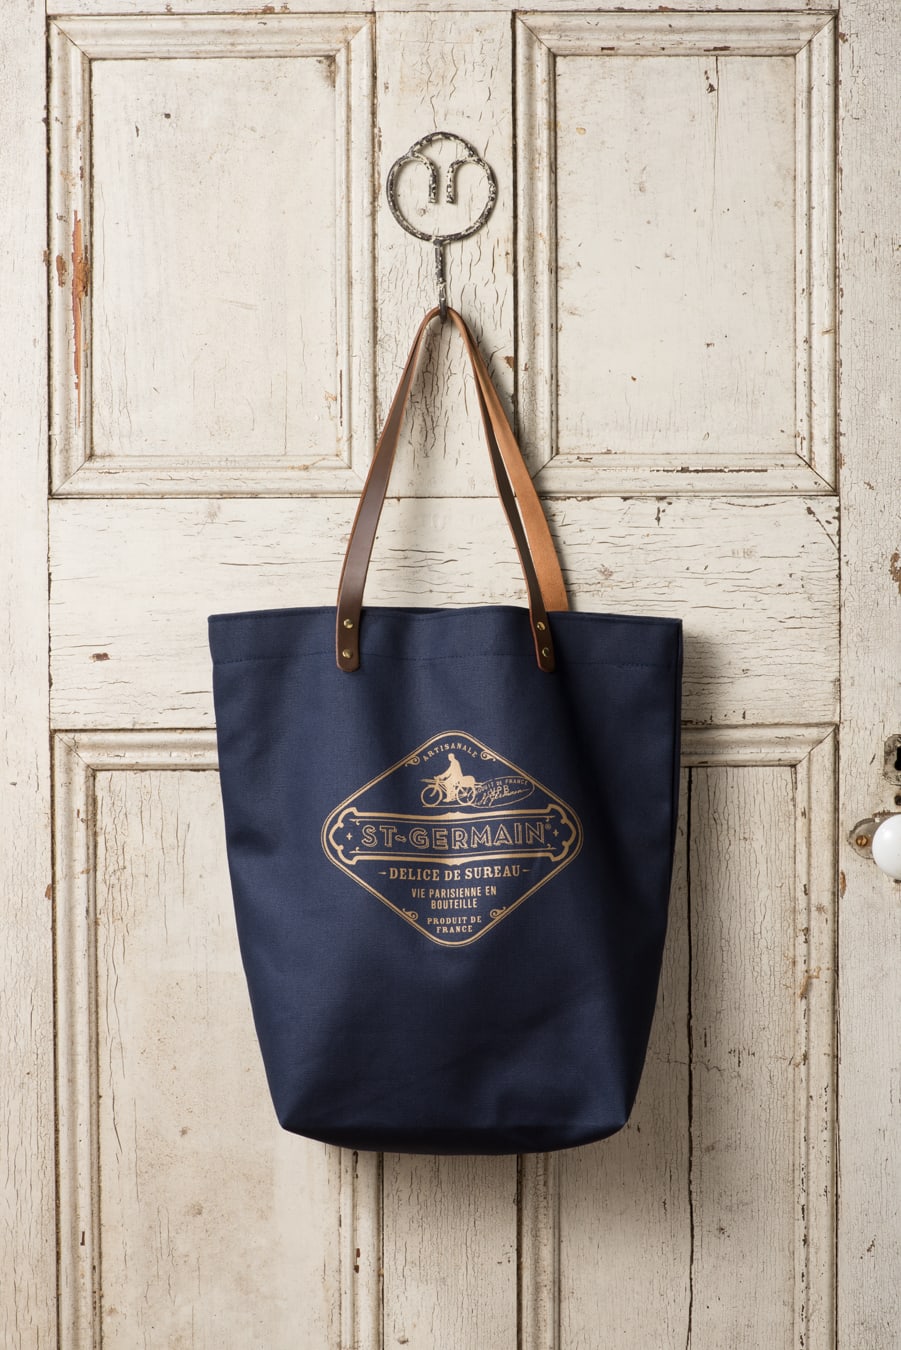 St-Germain spirits design leather handle tote bag promotion design